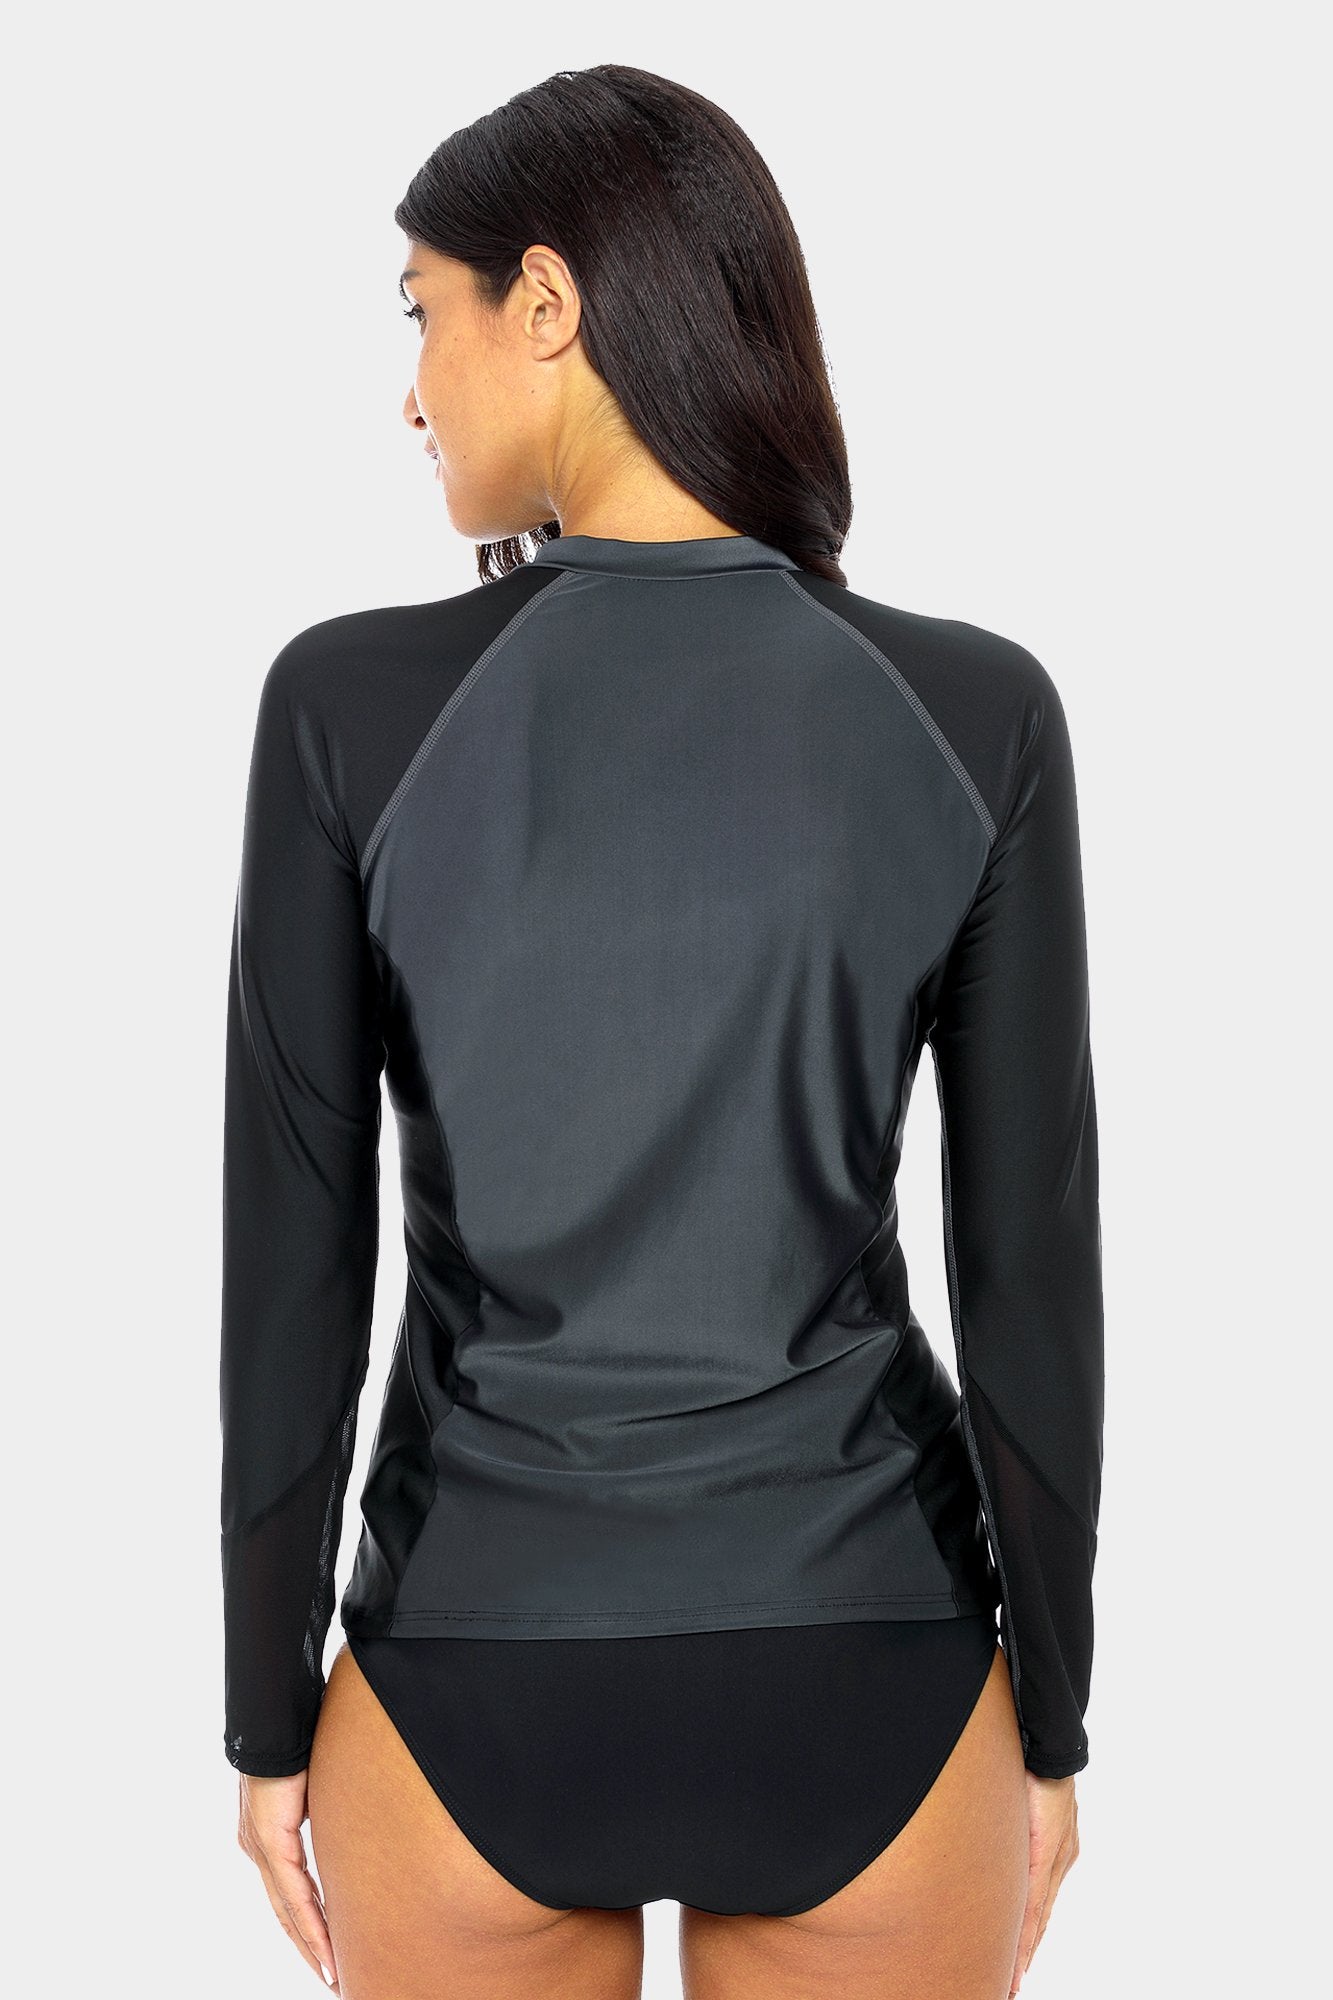 Women's Sleek Quarter Zip Long Sleeve UPF 50+ Rash Guard-Attraco | Fashion Outdoor Clothing